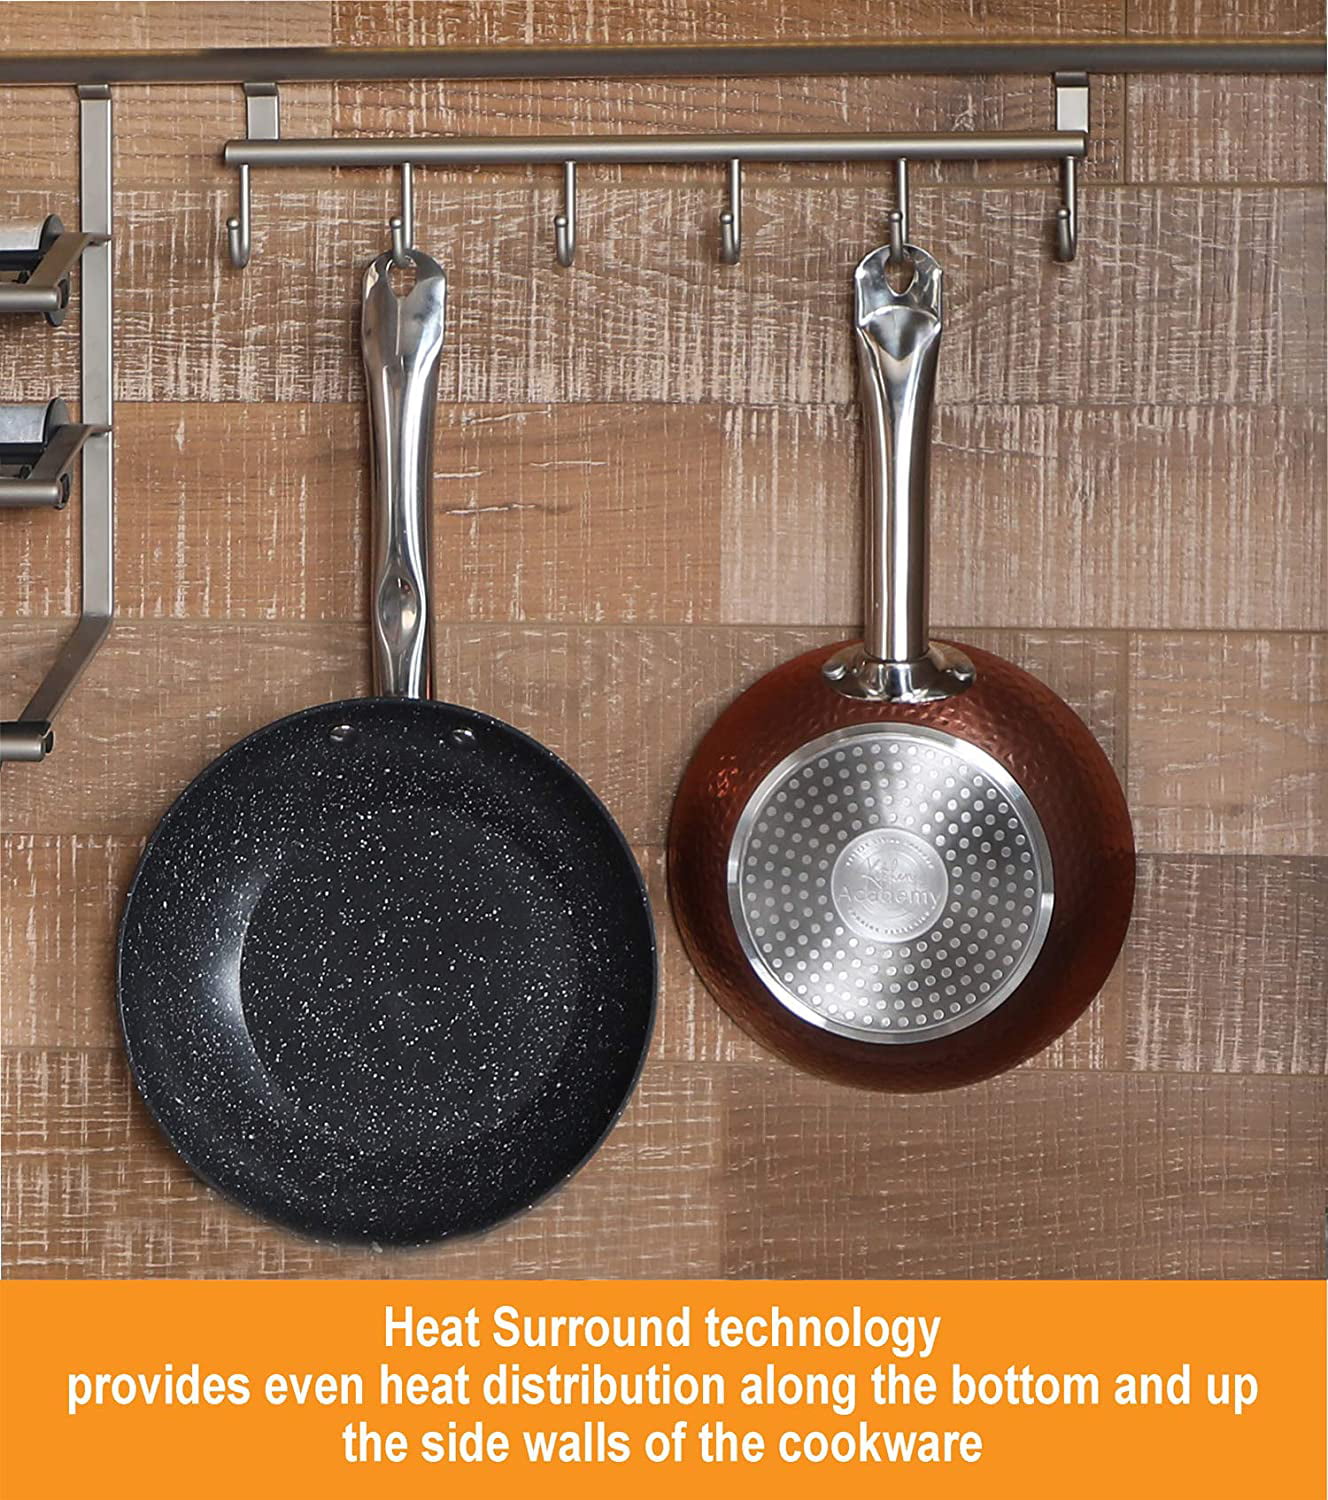 Induction Kitchen Cookware Sets Nonstick - Granite Hammered Pan Set 15  Piece, Dishwasher Safe Cooking Pots and Pans Set